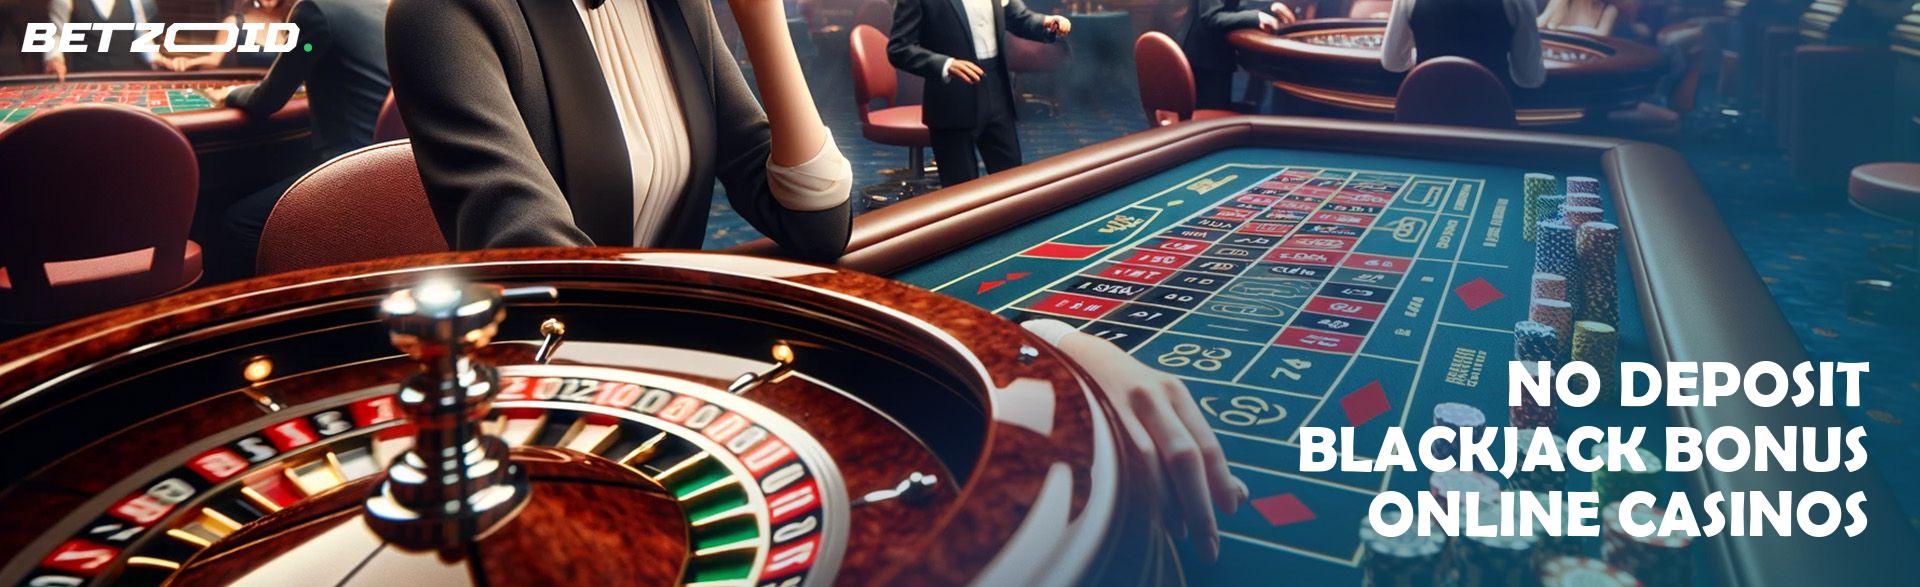 No Deposit Blackjack Bonus Online Casinos.